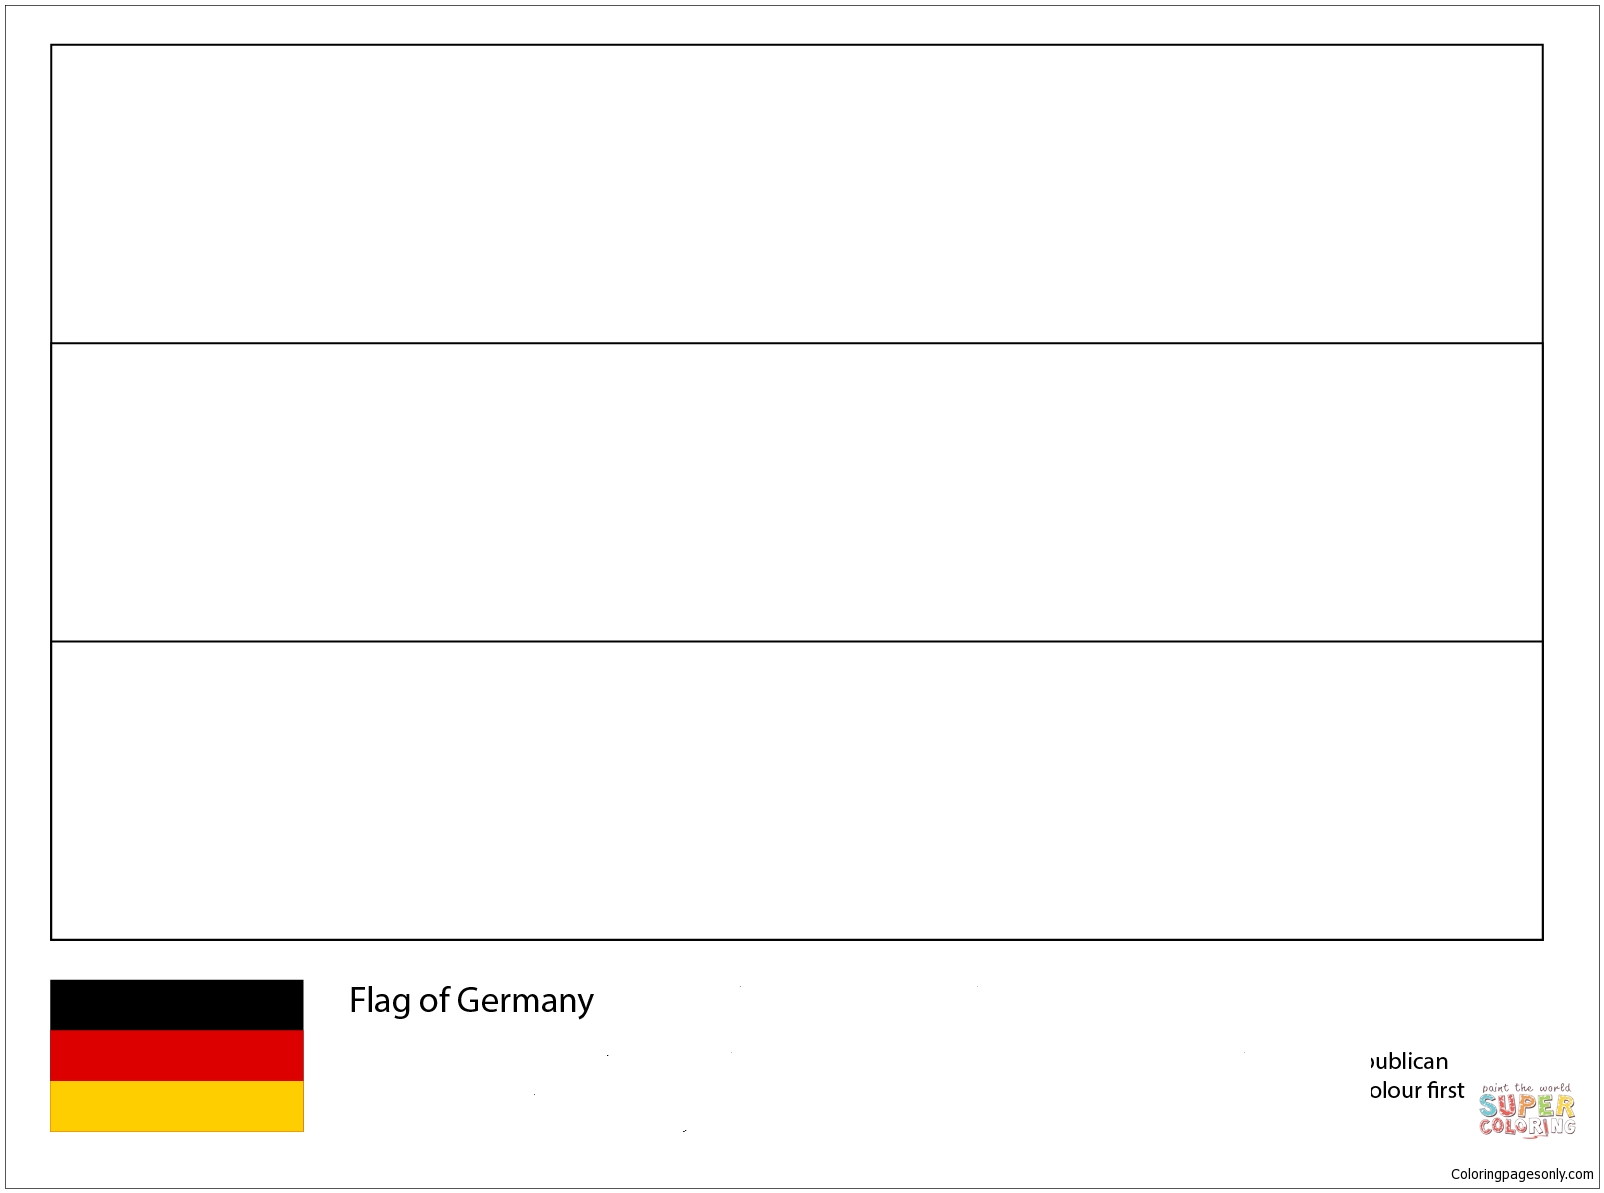 Флаг Германии-ЧМ-2018 из флагов ЧМ-2018